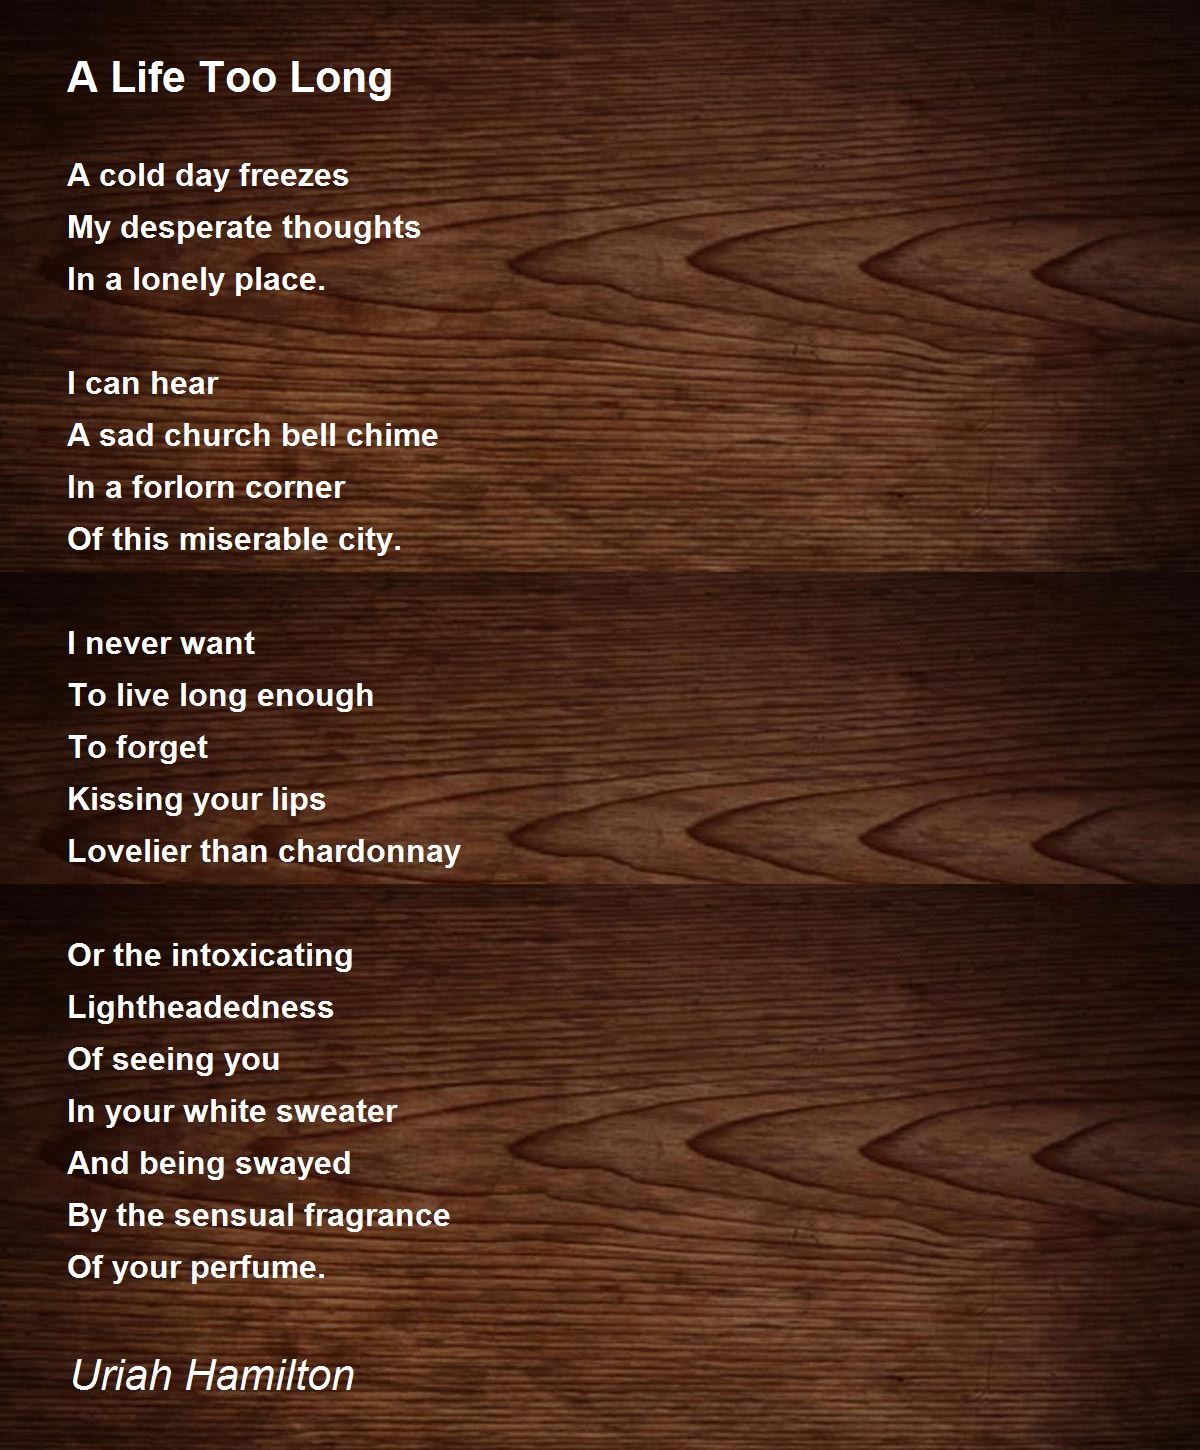 A Life Too Long - A Life Too Long Poem by Uriah Hamilton